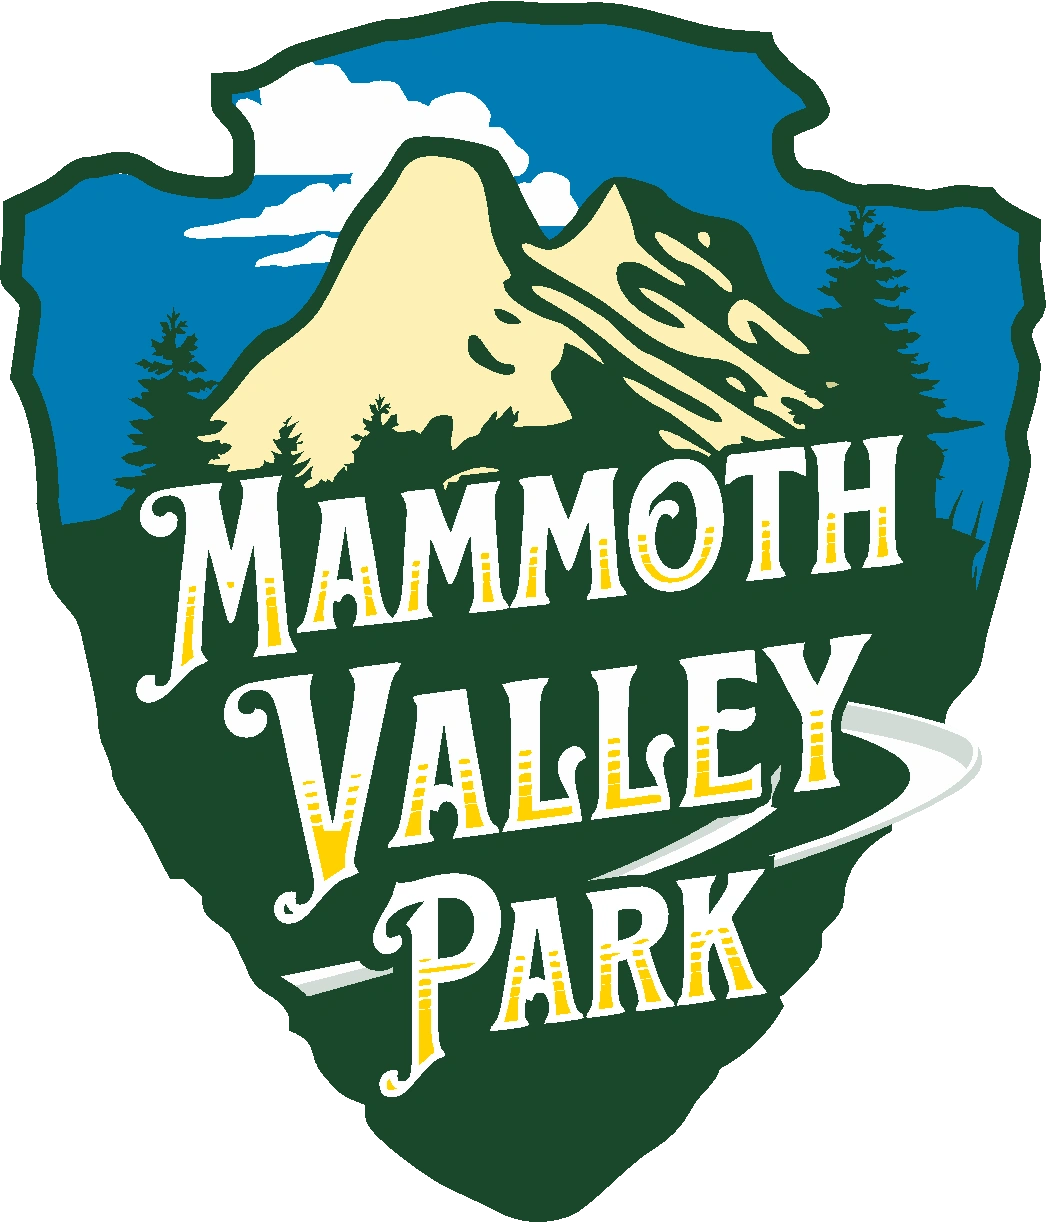 Mammoth Valley Park photo